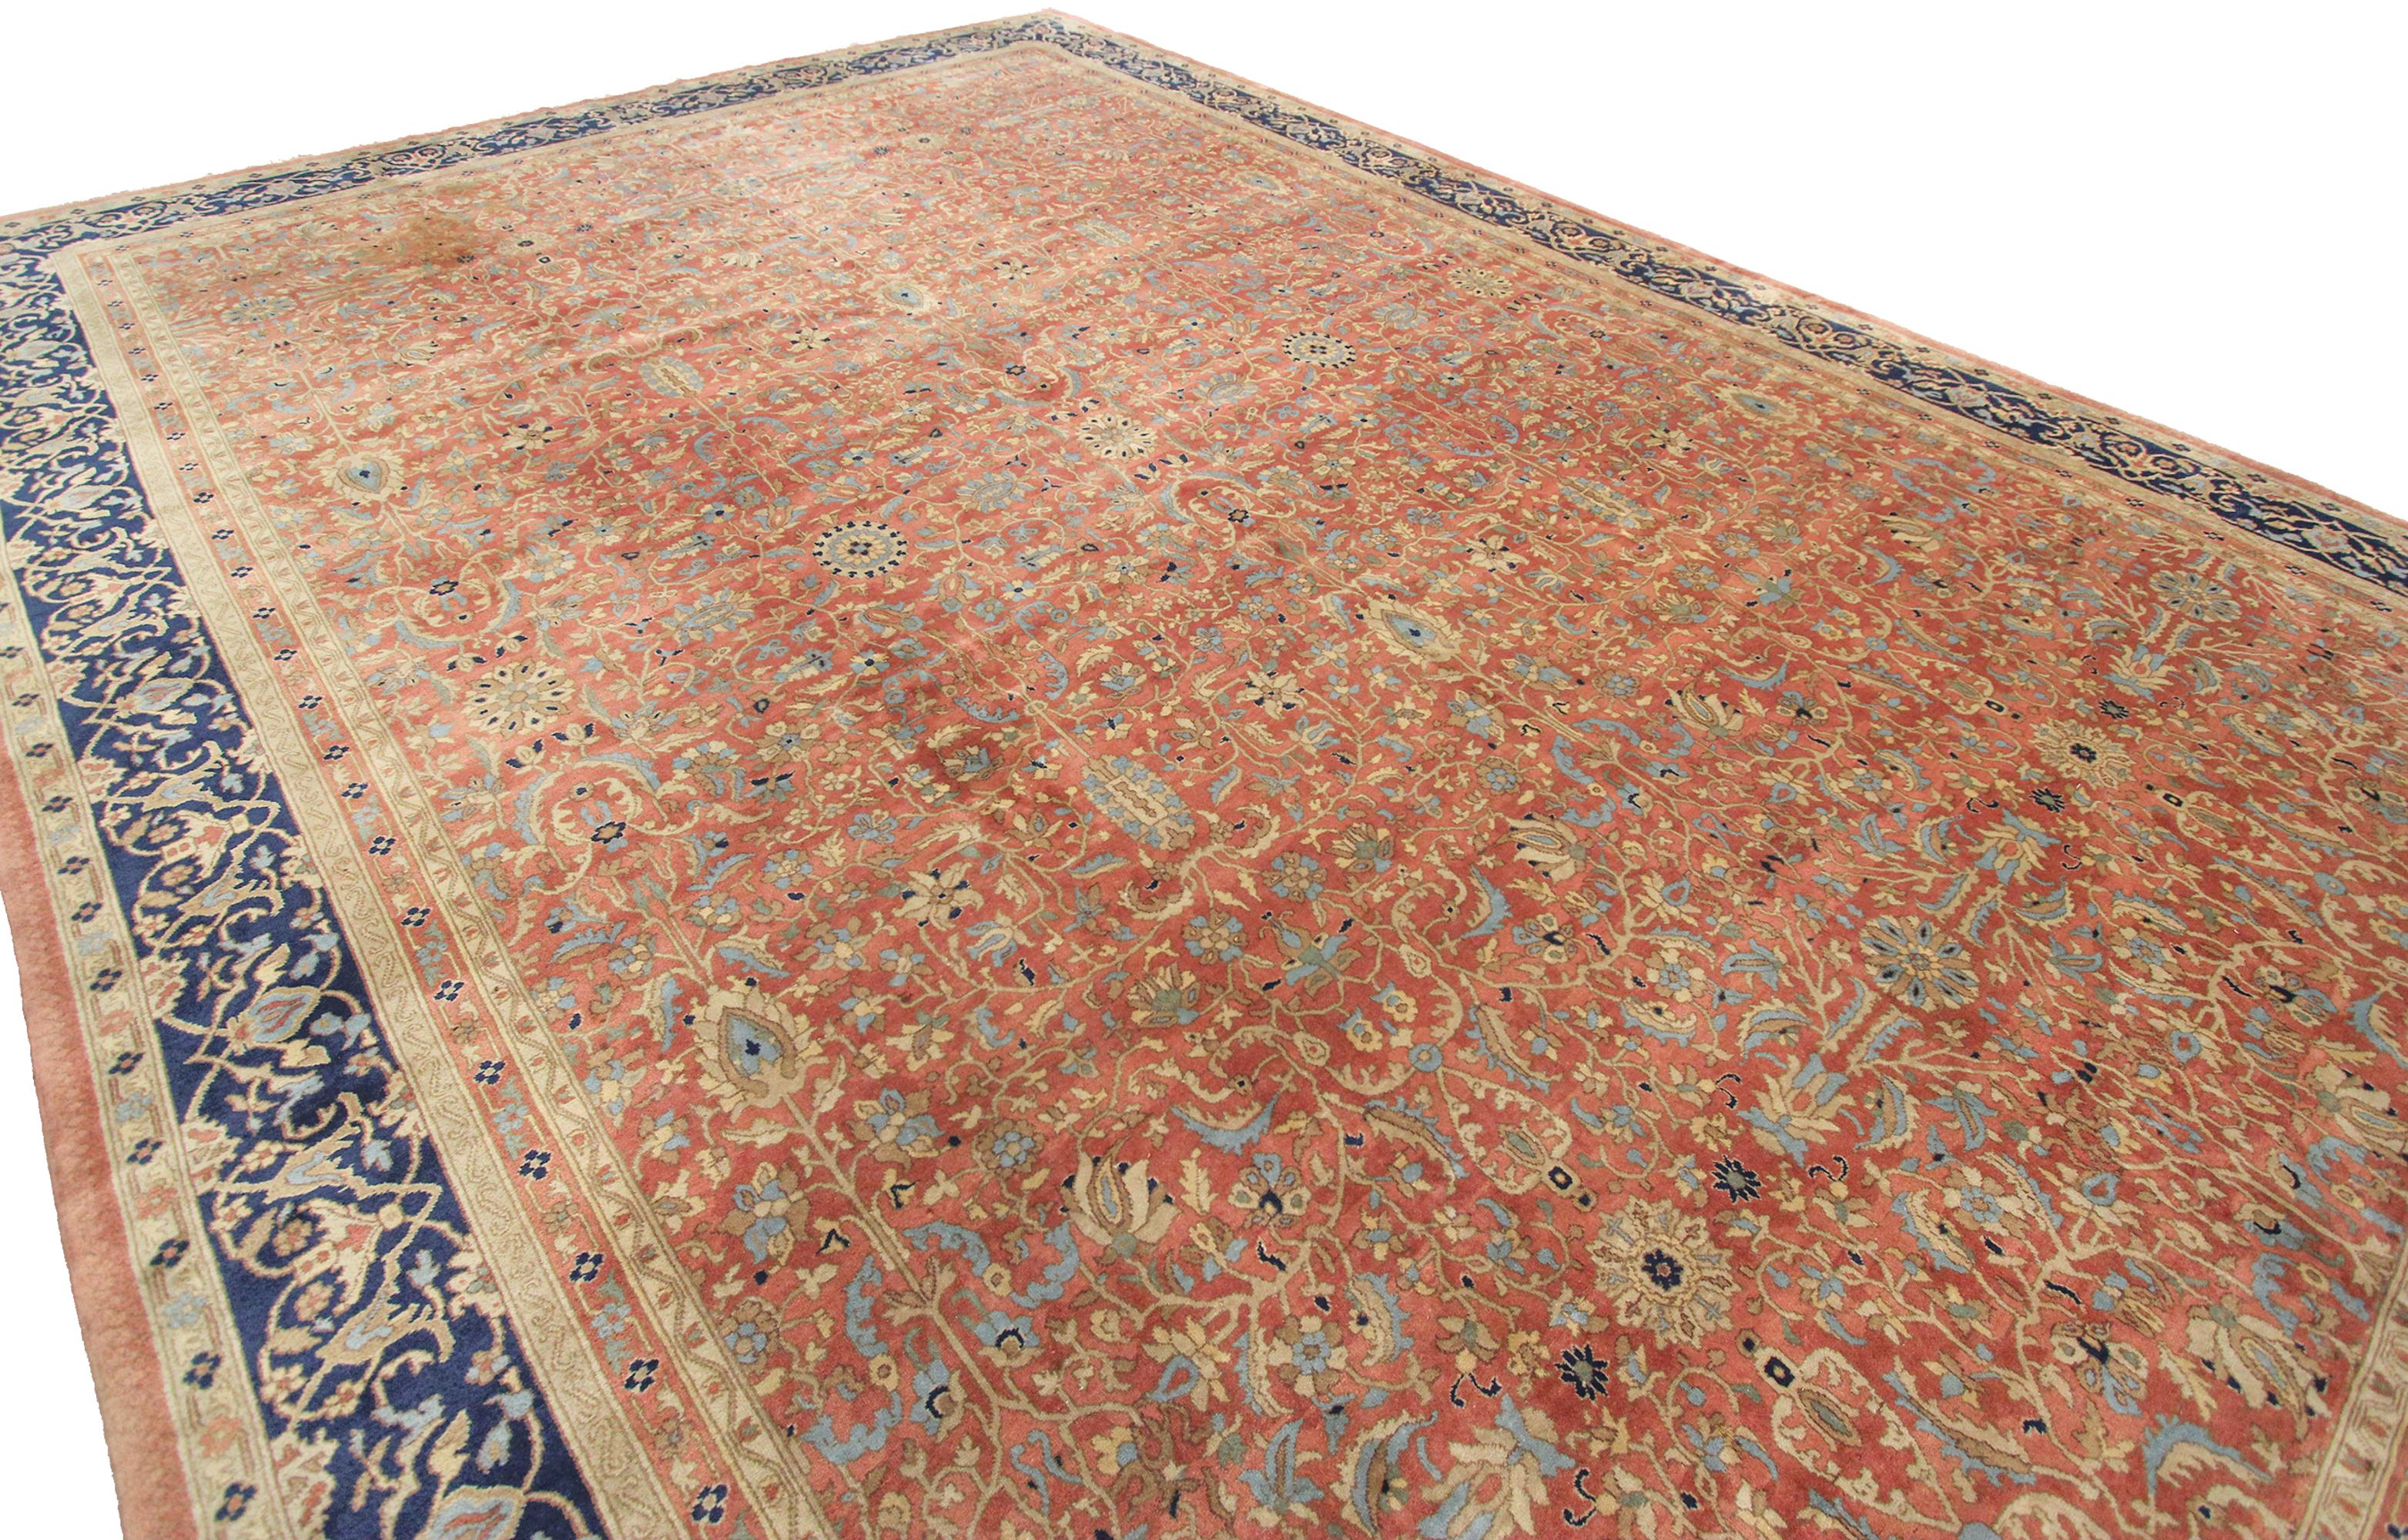 Wool Antique Turkish Oushak Sivas Fine Geometric Overall Rug 11x16 1900 328cm x 457cm For Sale